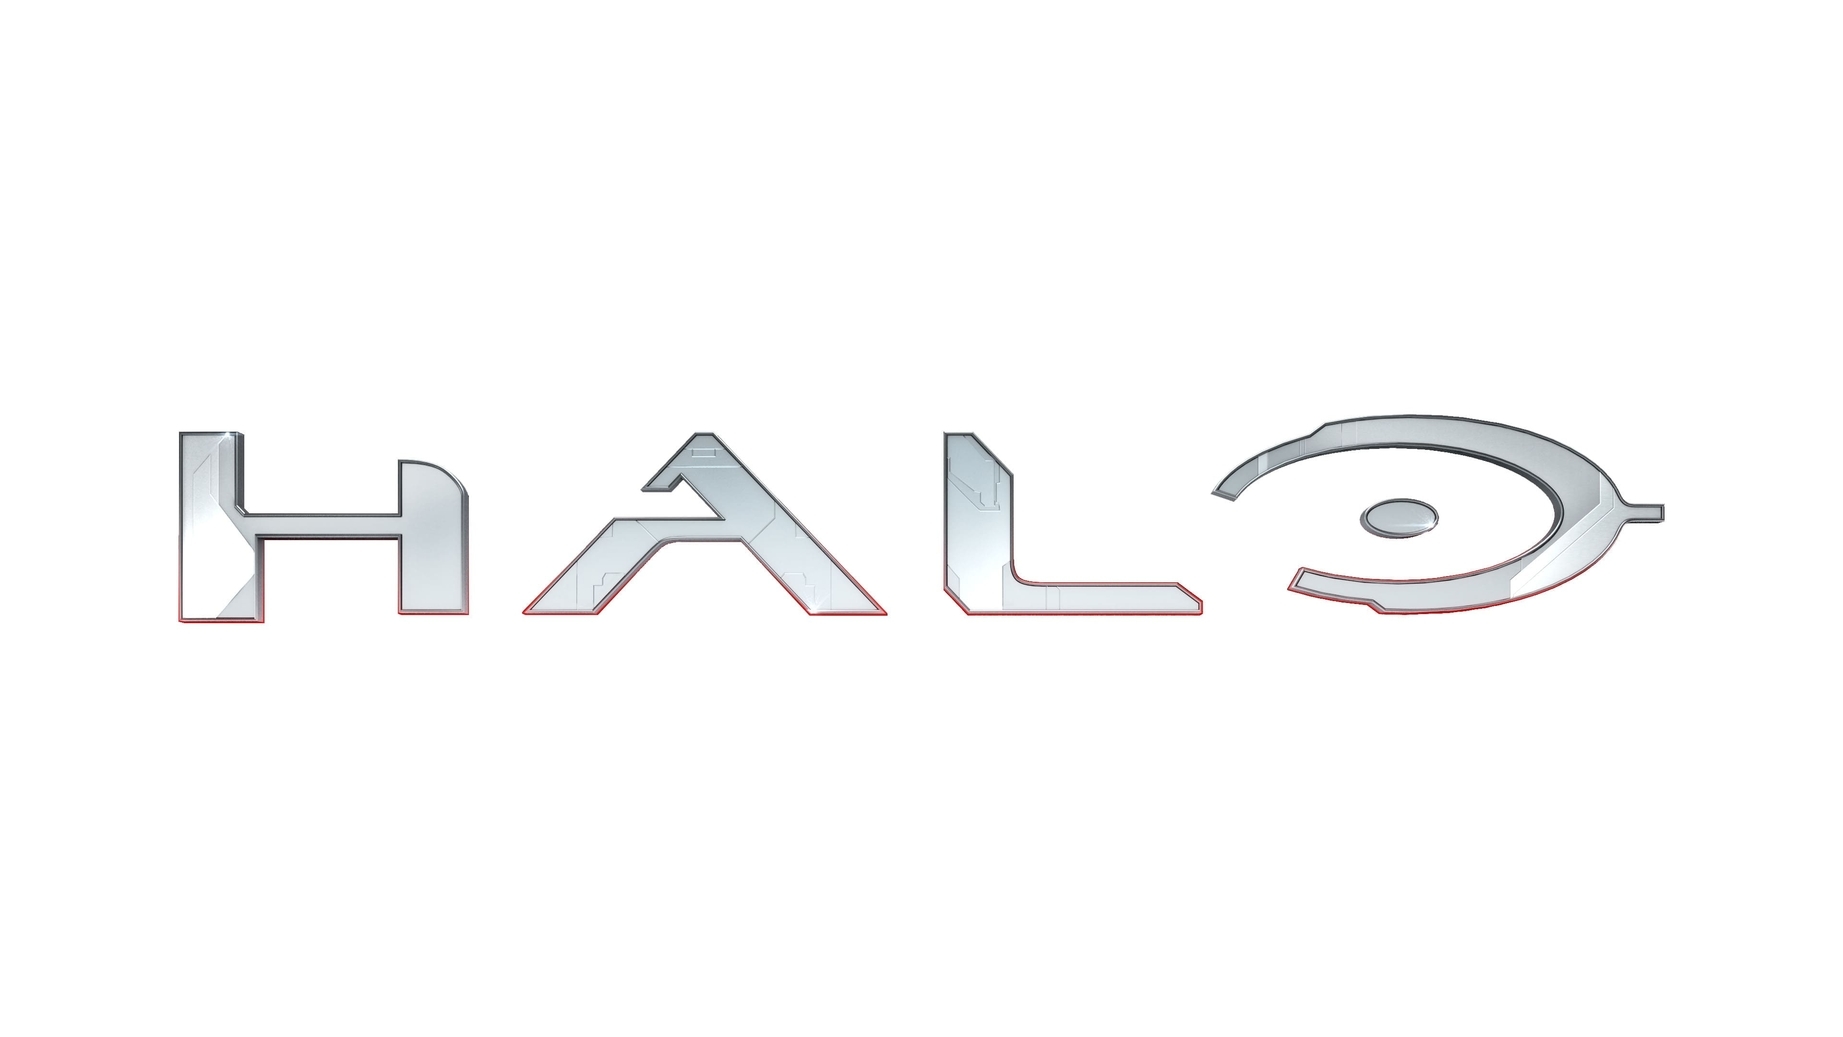 Halo sign 2016 present